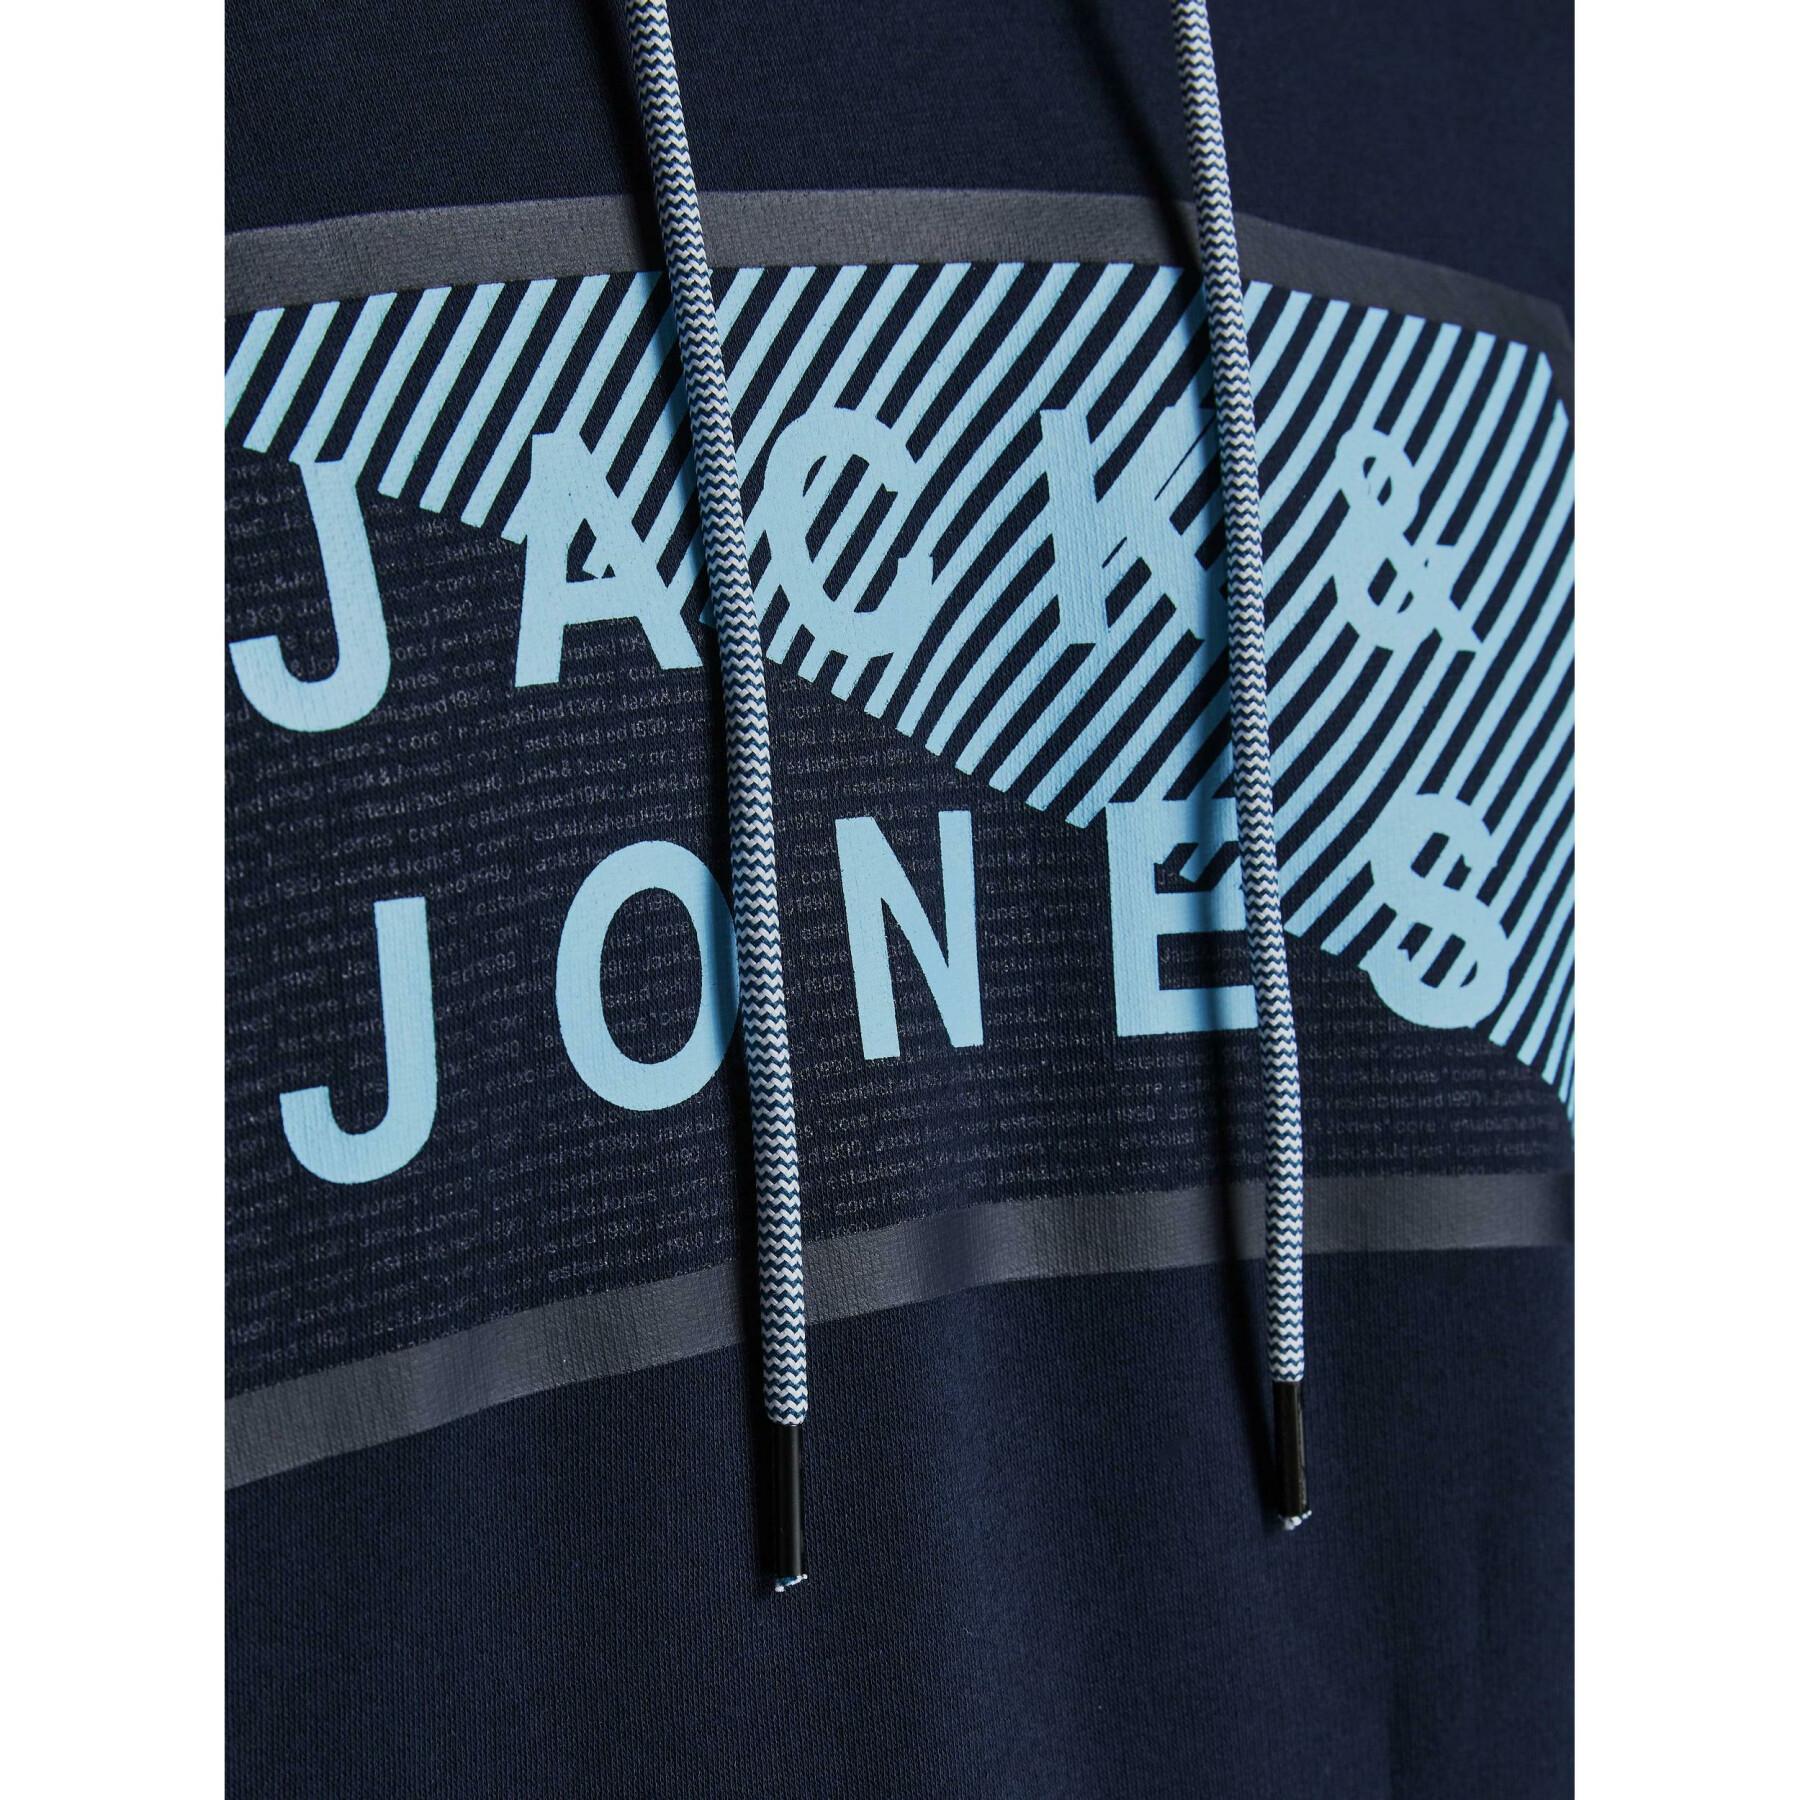 Hooded sweatshirt Jack & Jones Shawn